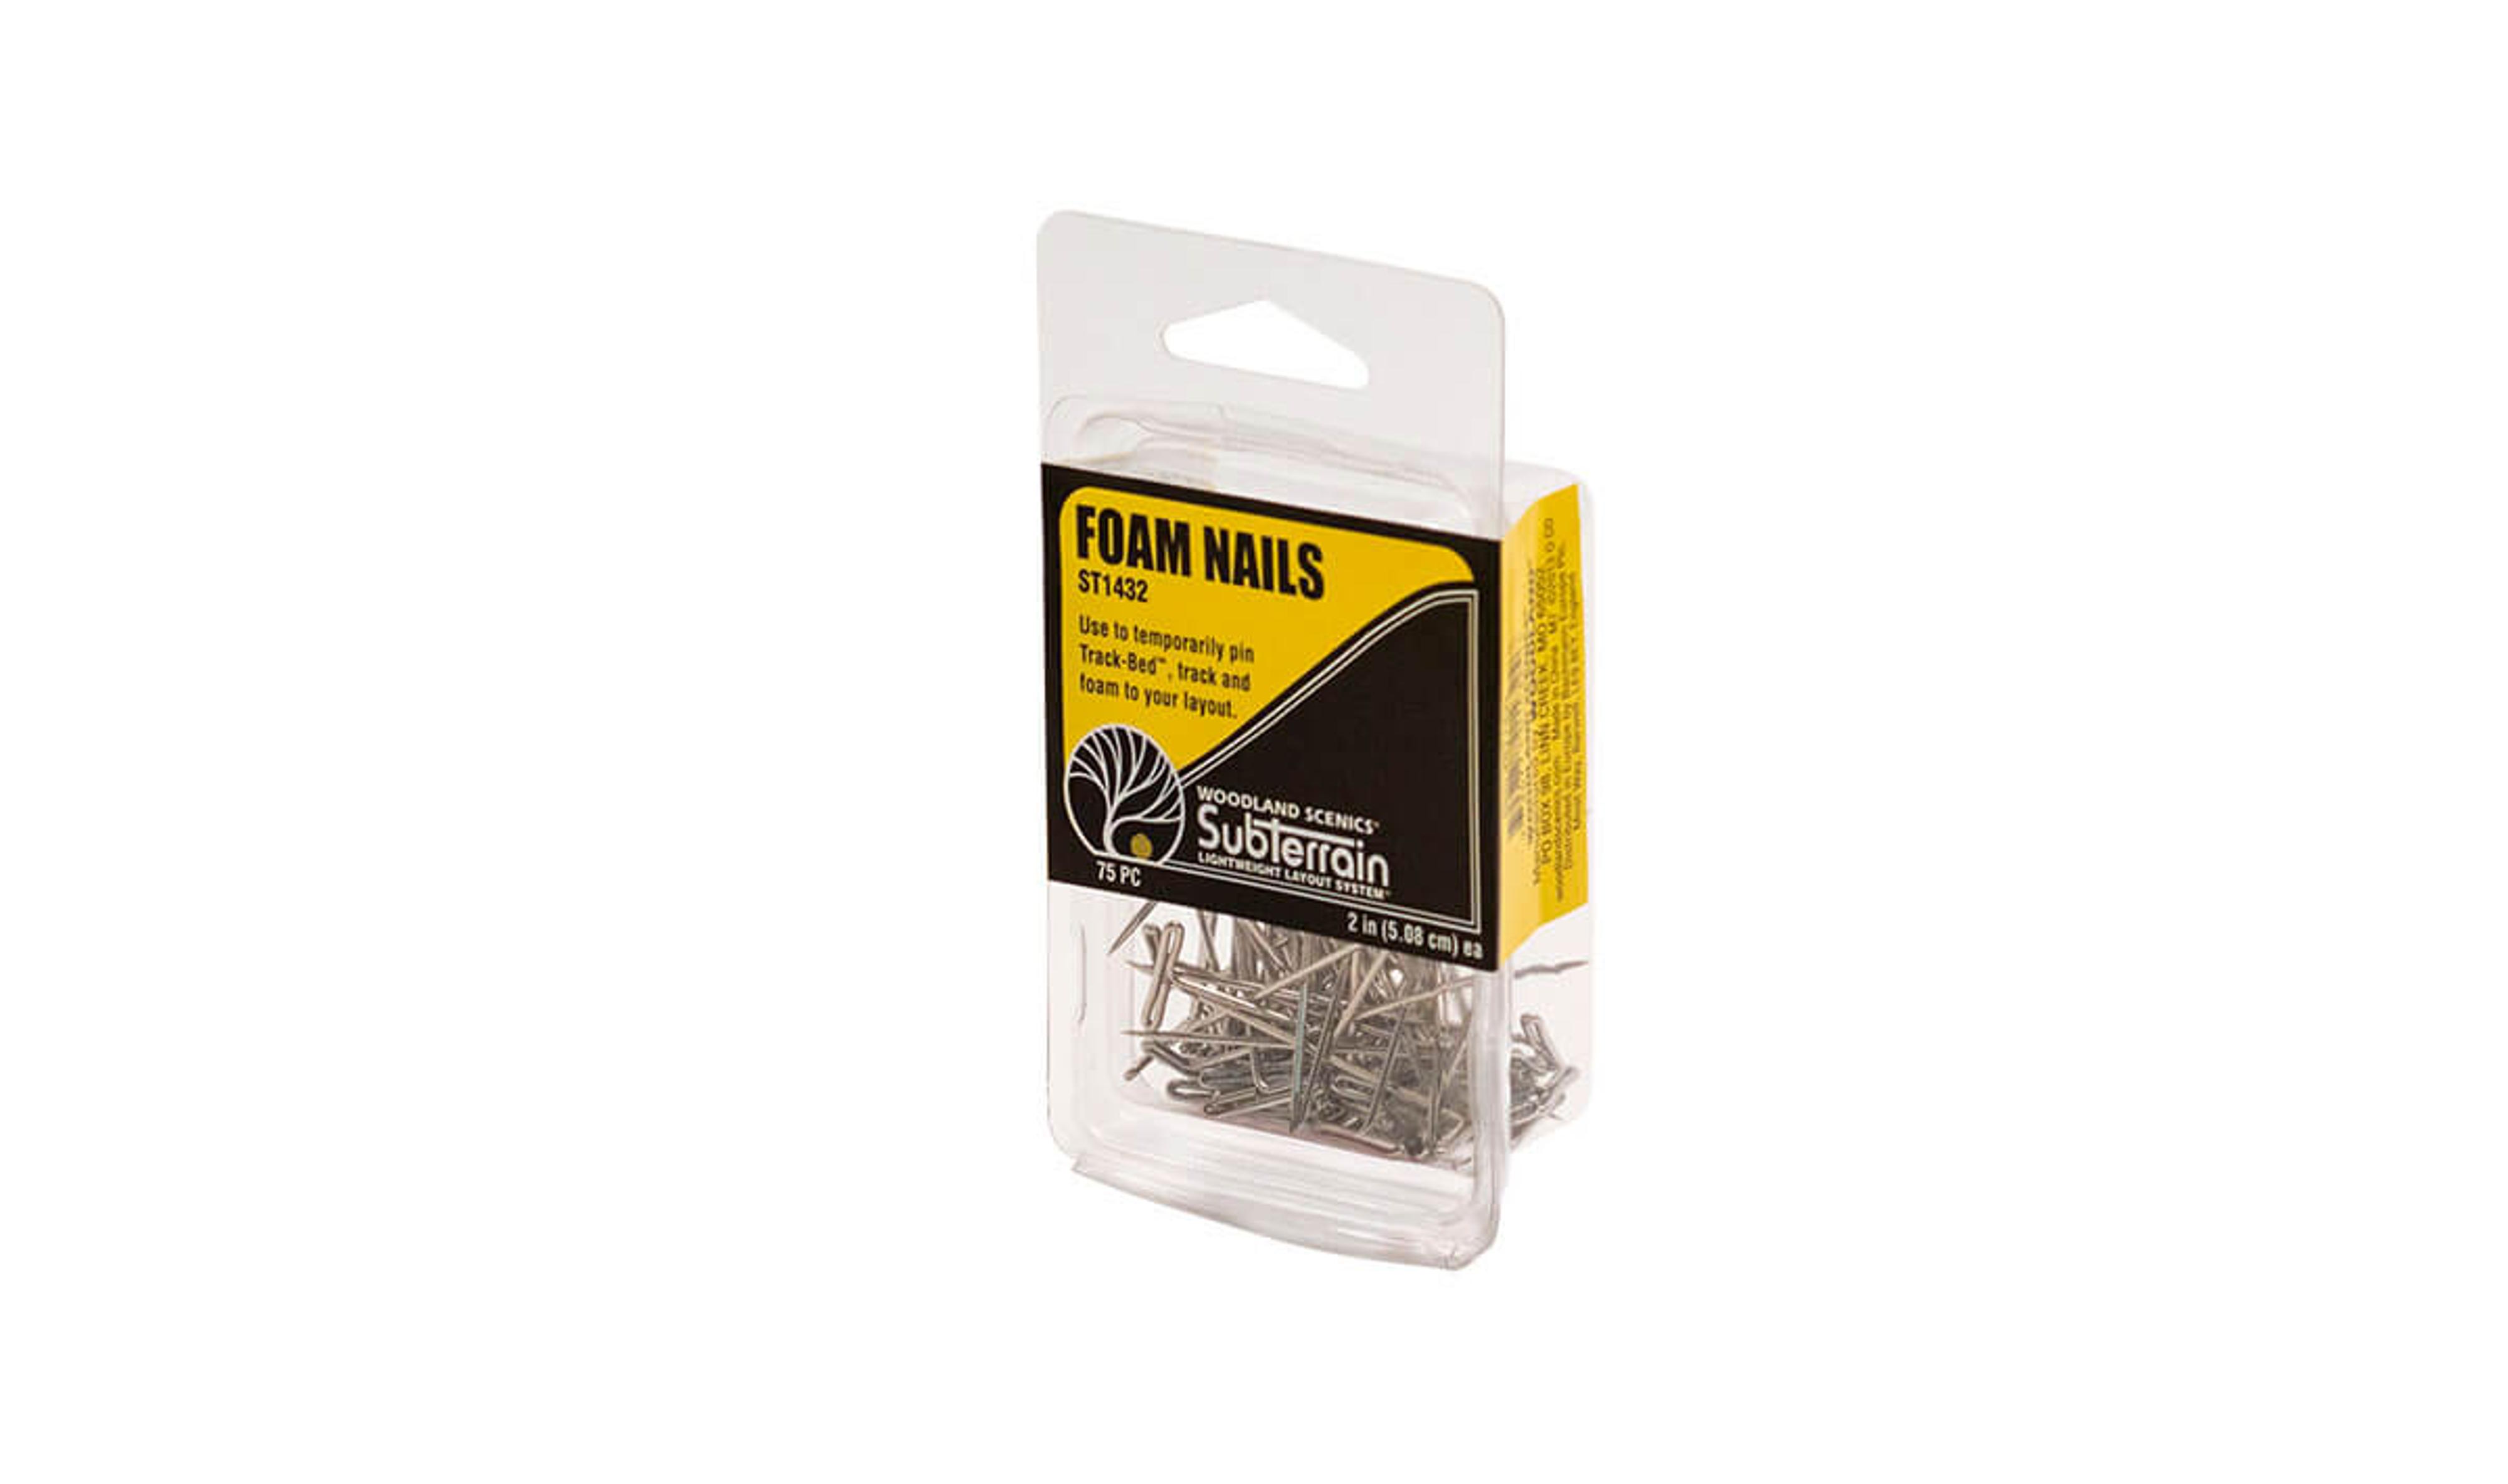 Foam Nails 2 inch (75)